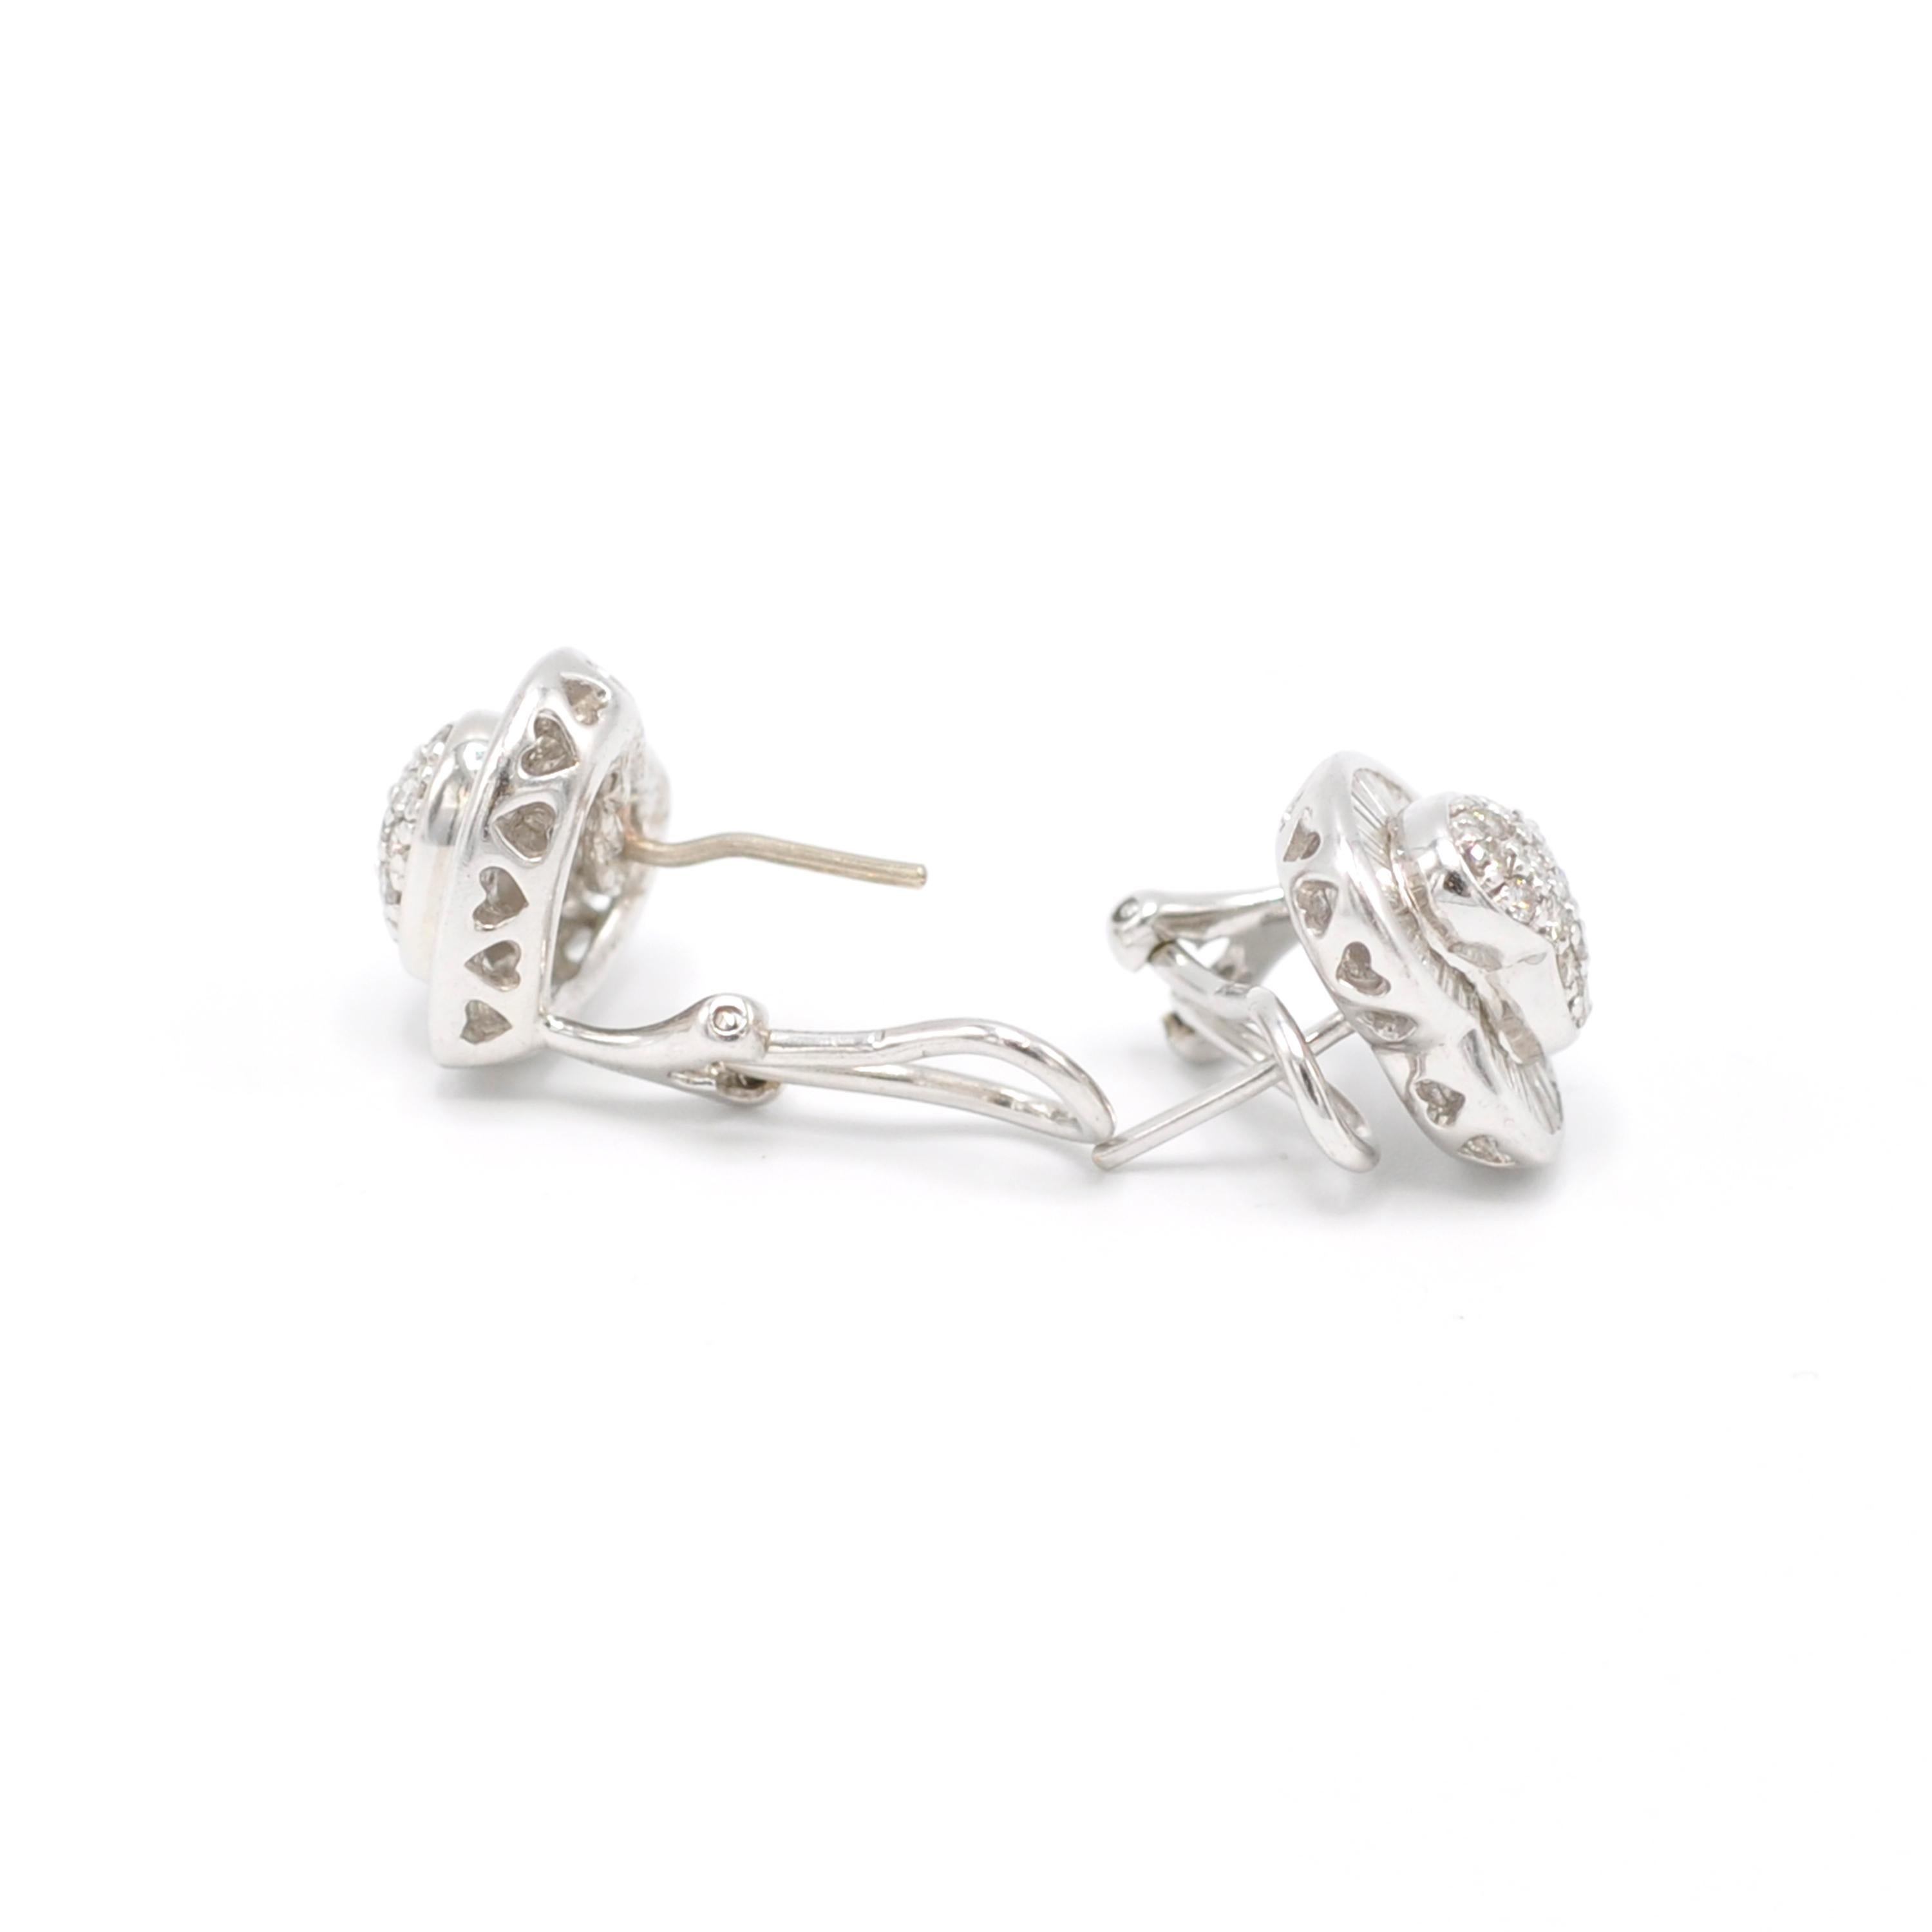 Round Cut White Gold Diamond Heart Earring Studs